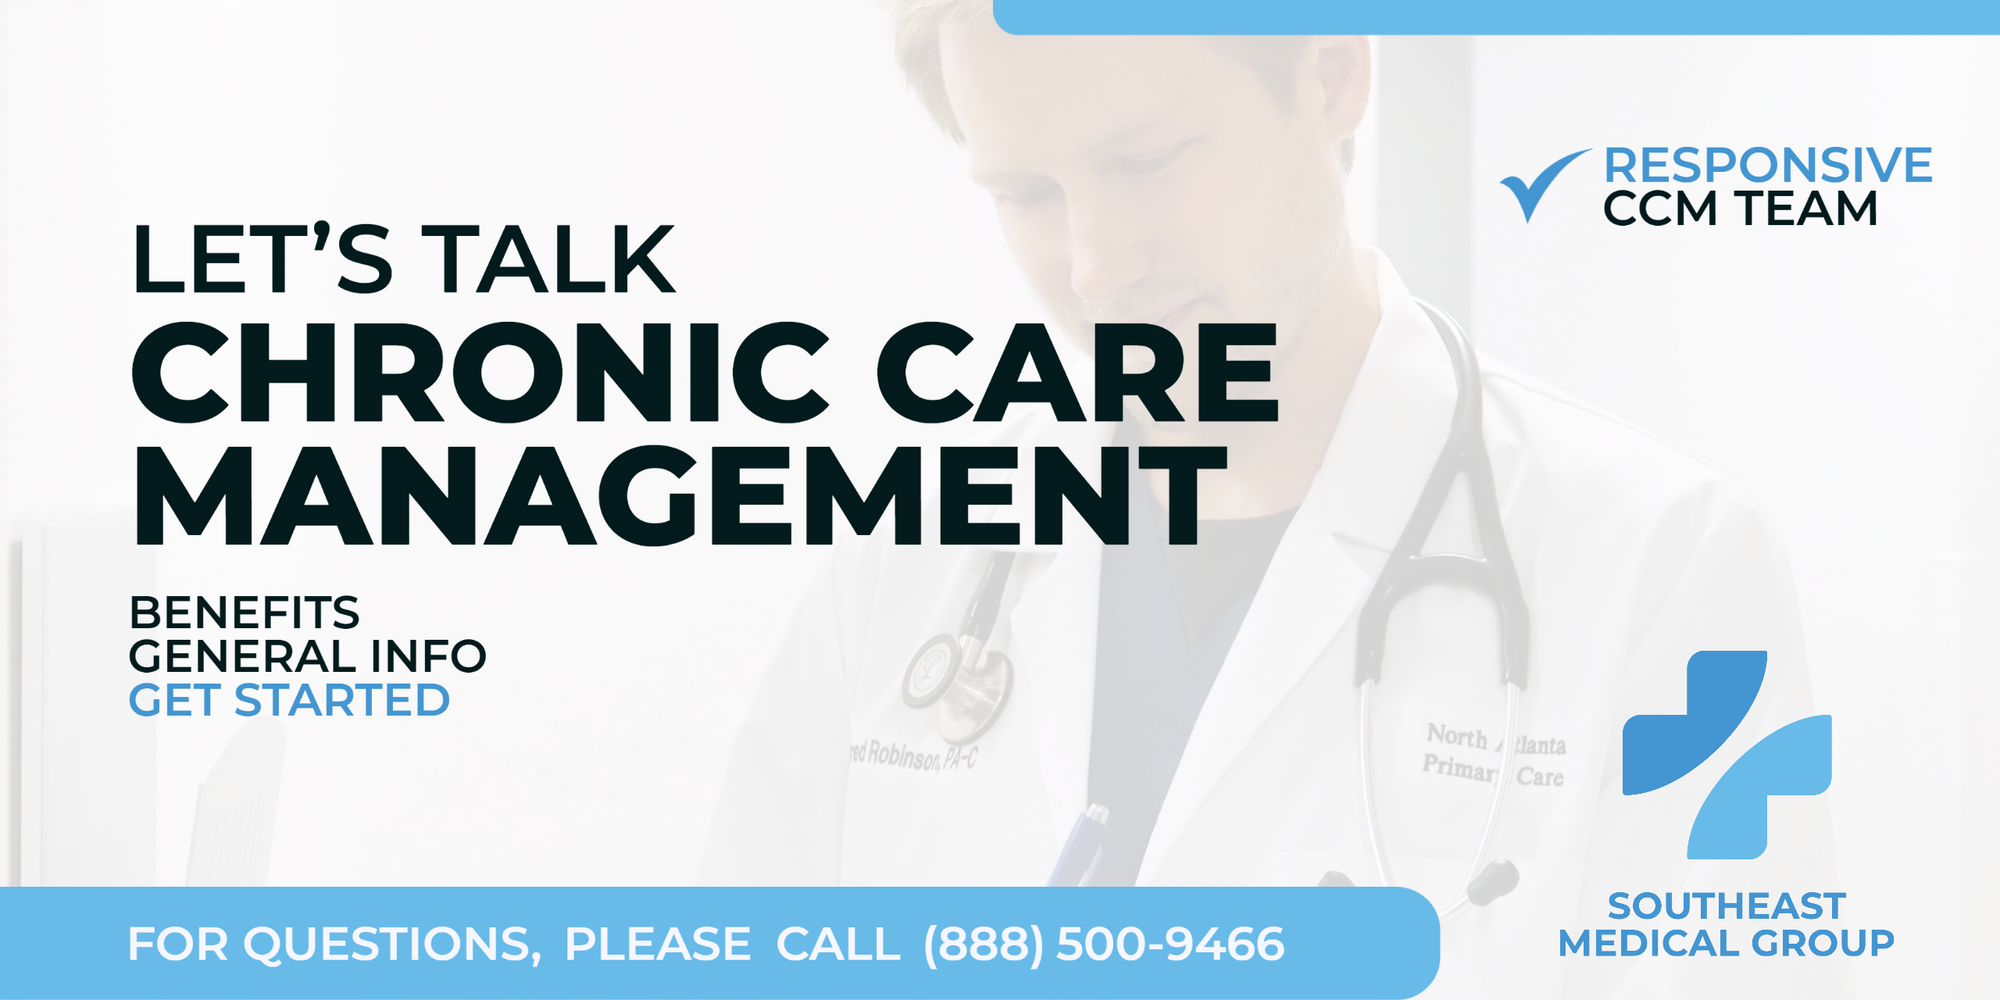 NAPC and SEMG Begin Chronic Care Management Program